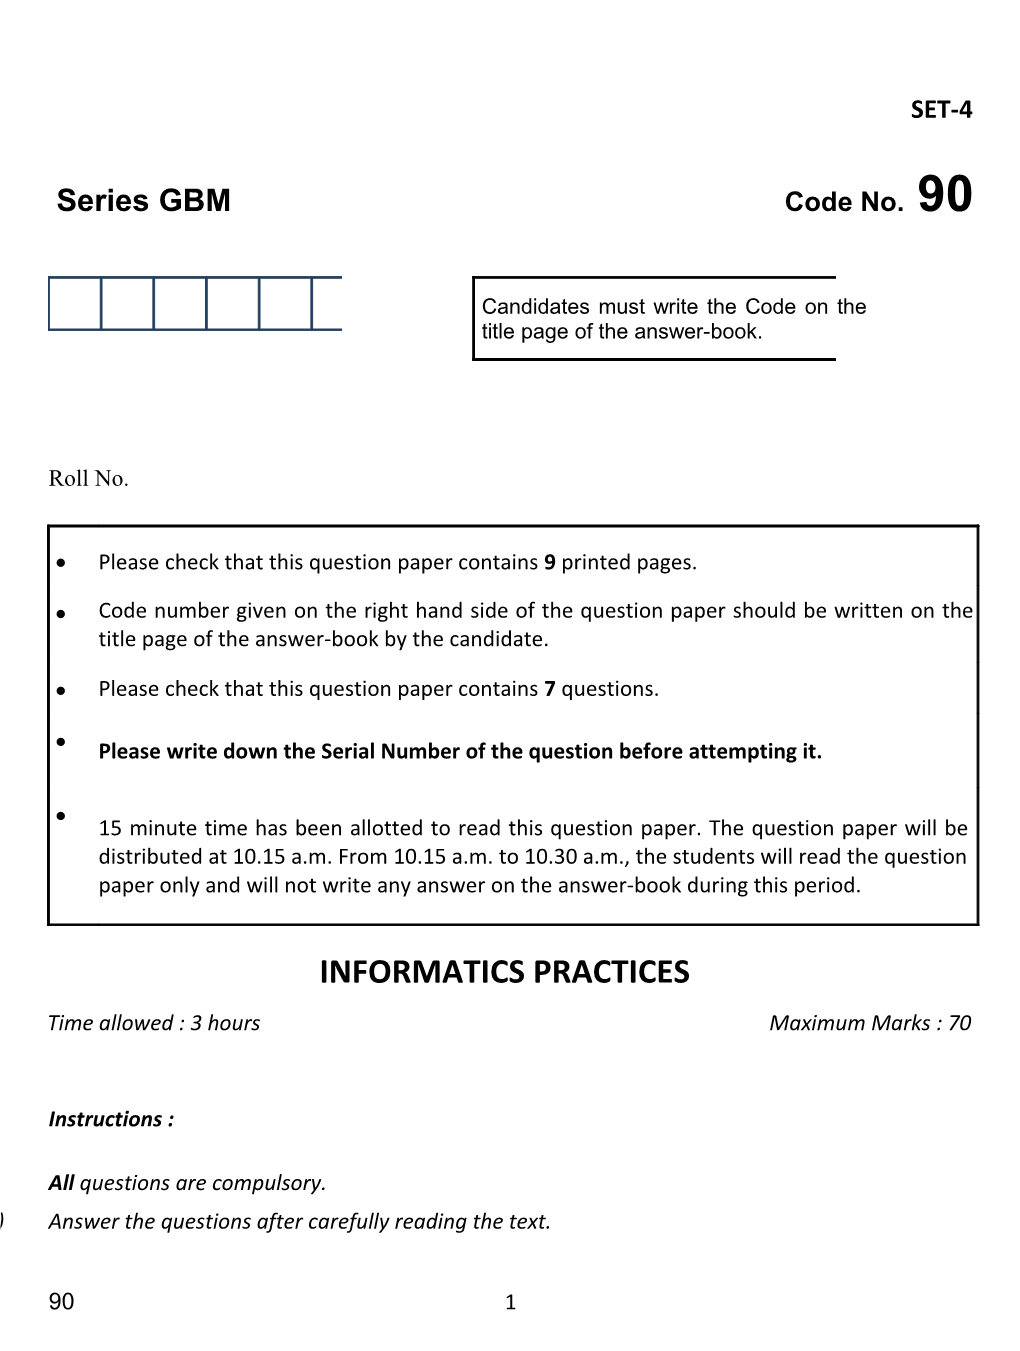 Series Gbmcode No. 90